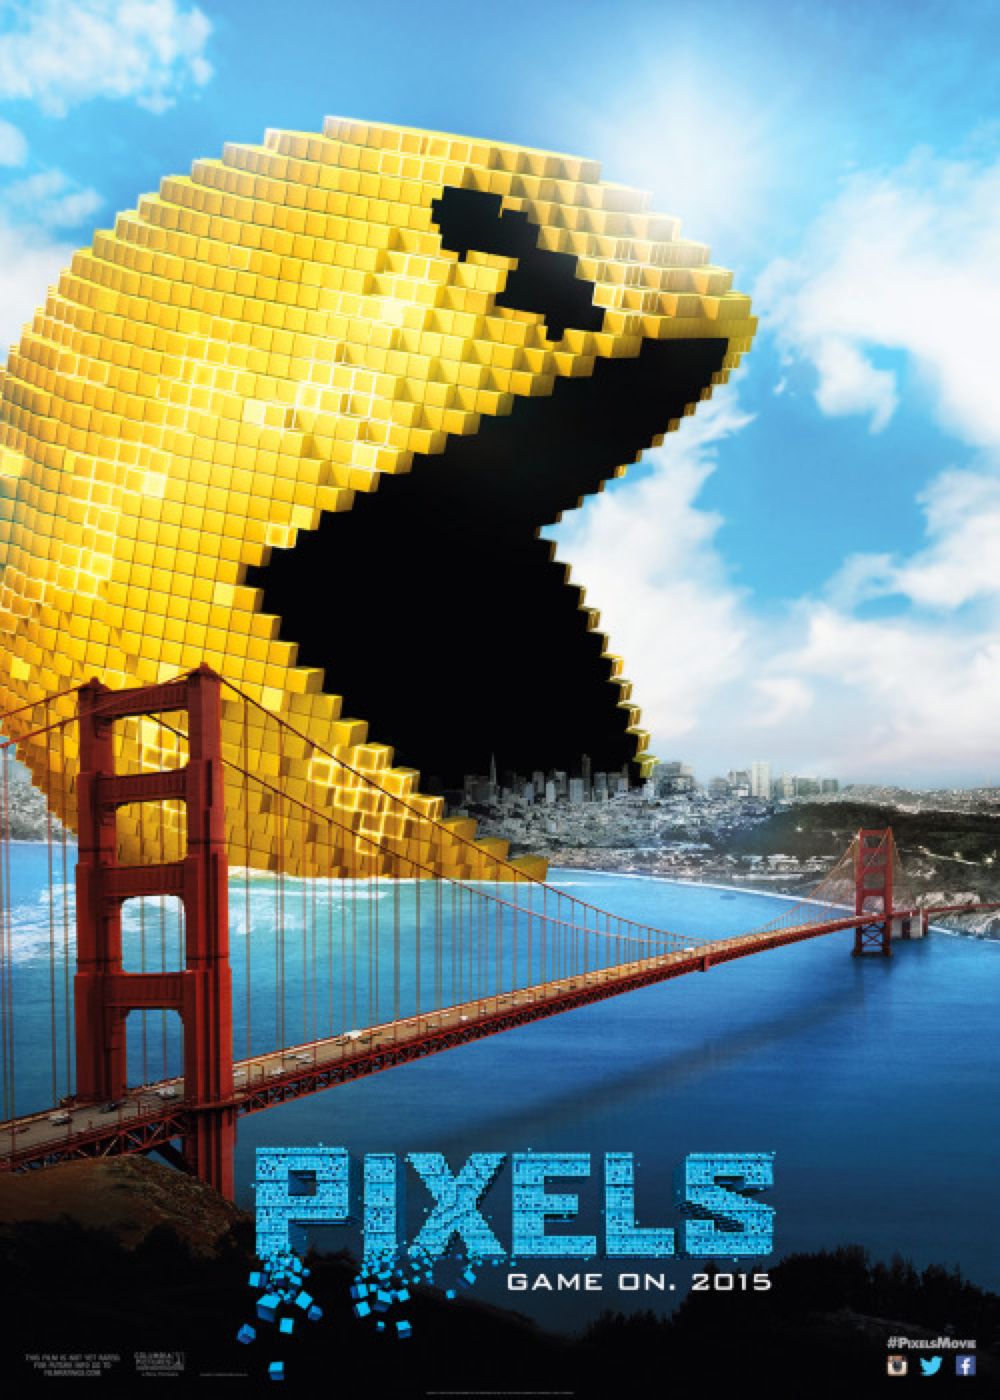 Pixels - Official Trailer